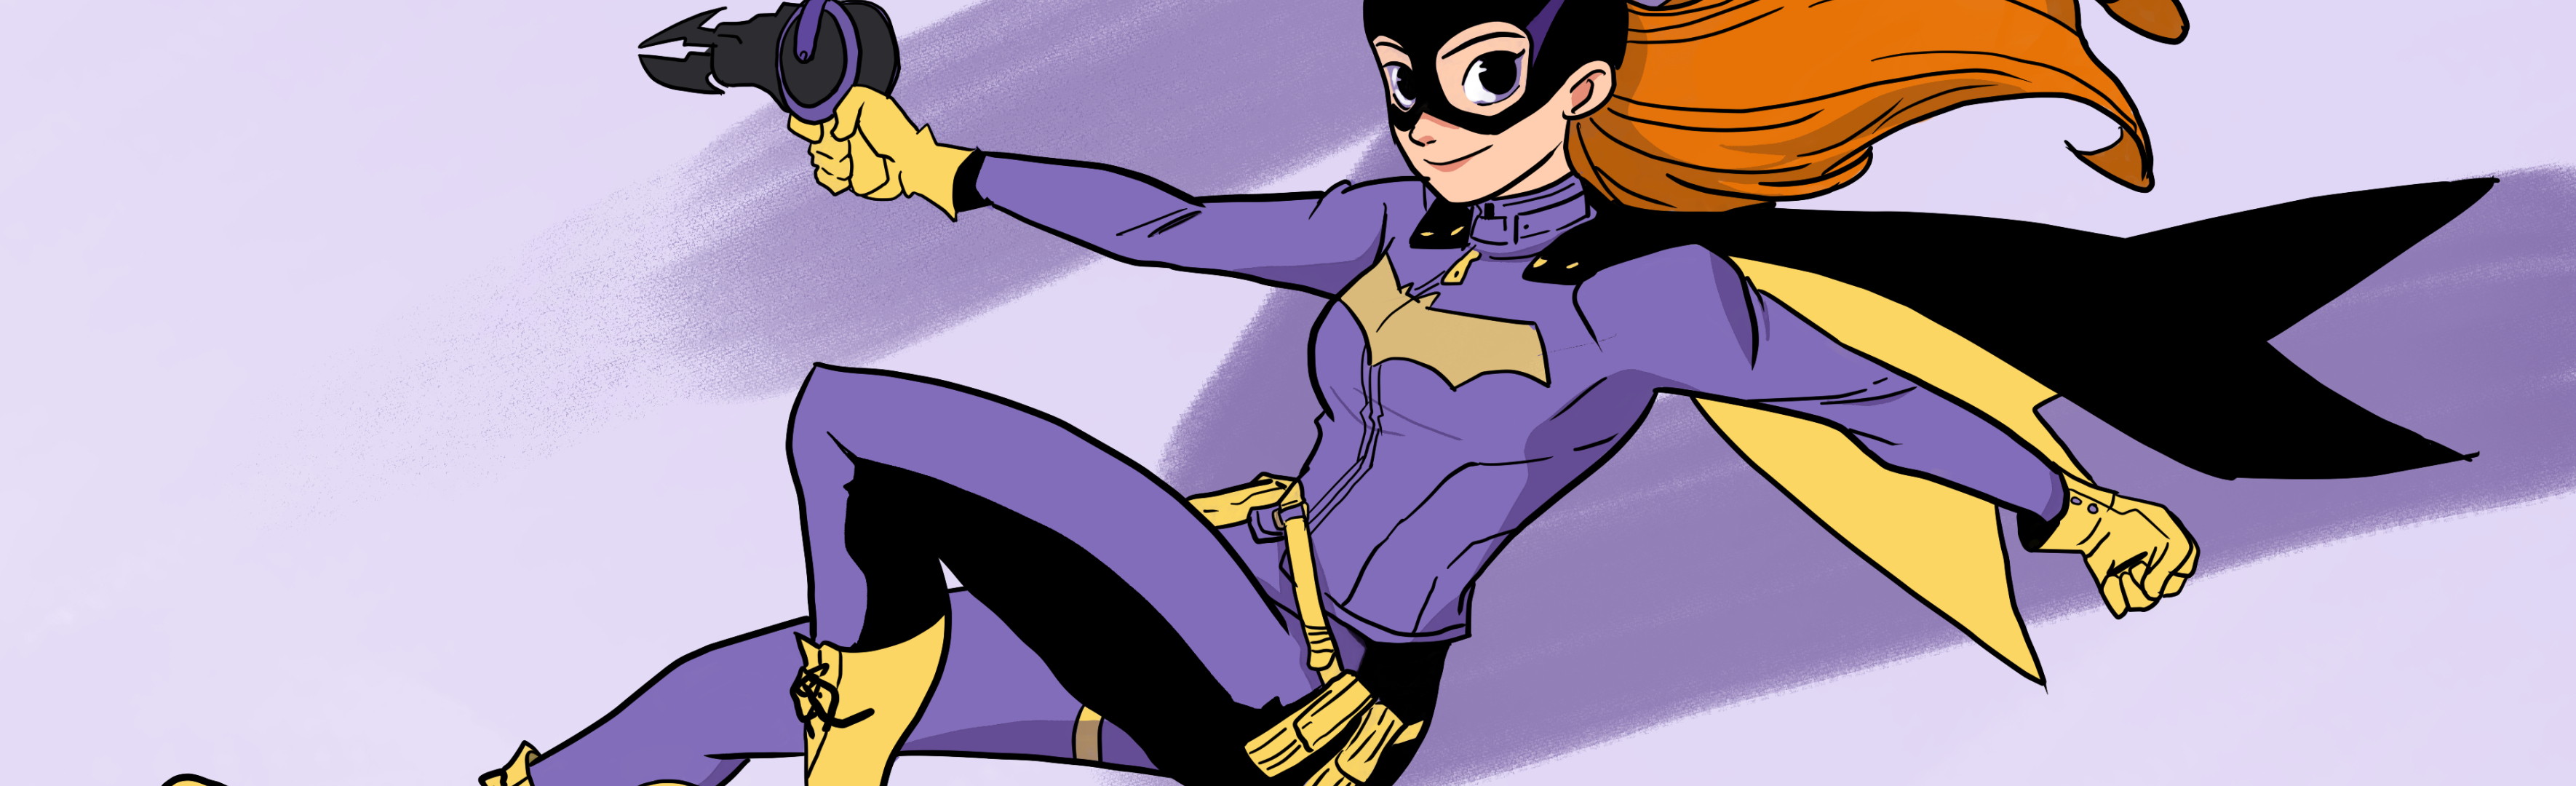 3540x1080 Resolution Batgirl Cartoon Art 3540x1080 Resolution Wallpaper ...